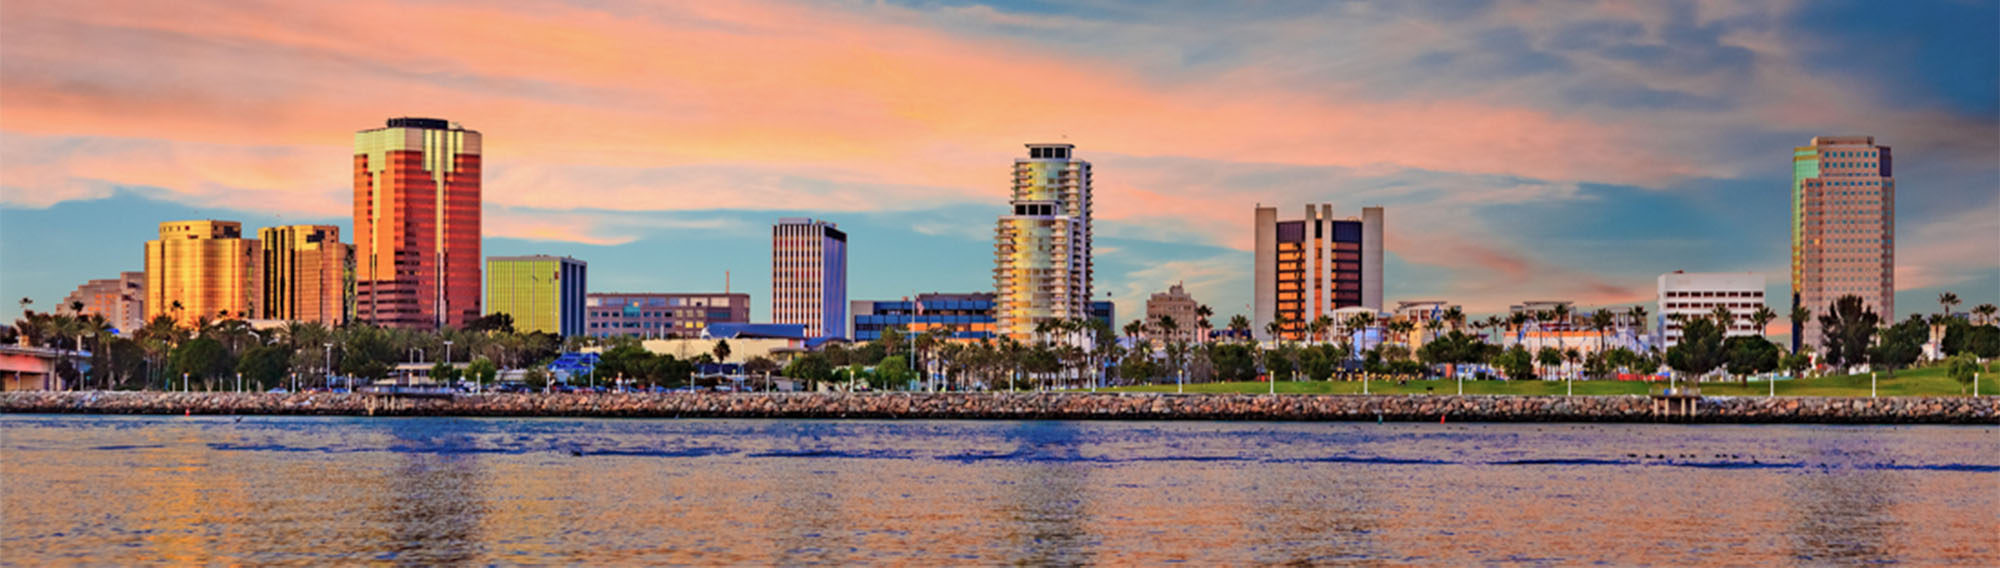 Cityscape of Long Beach, California.